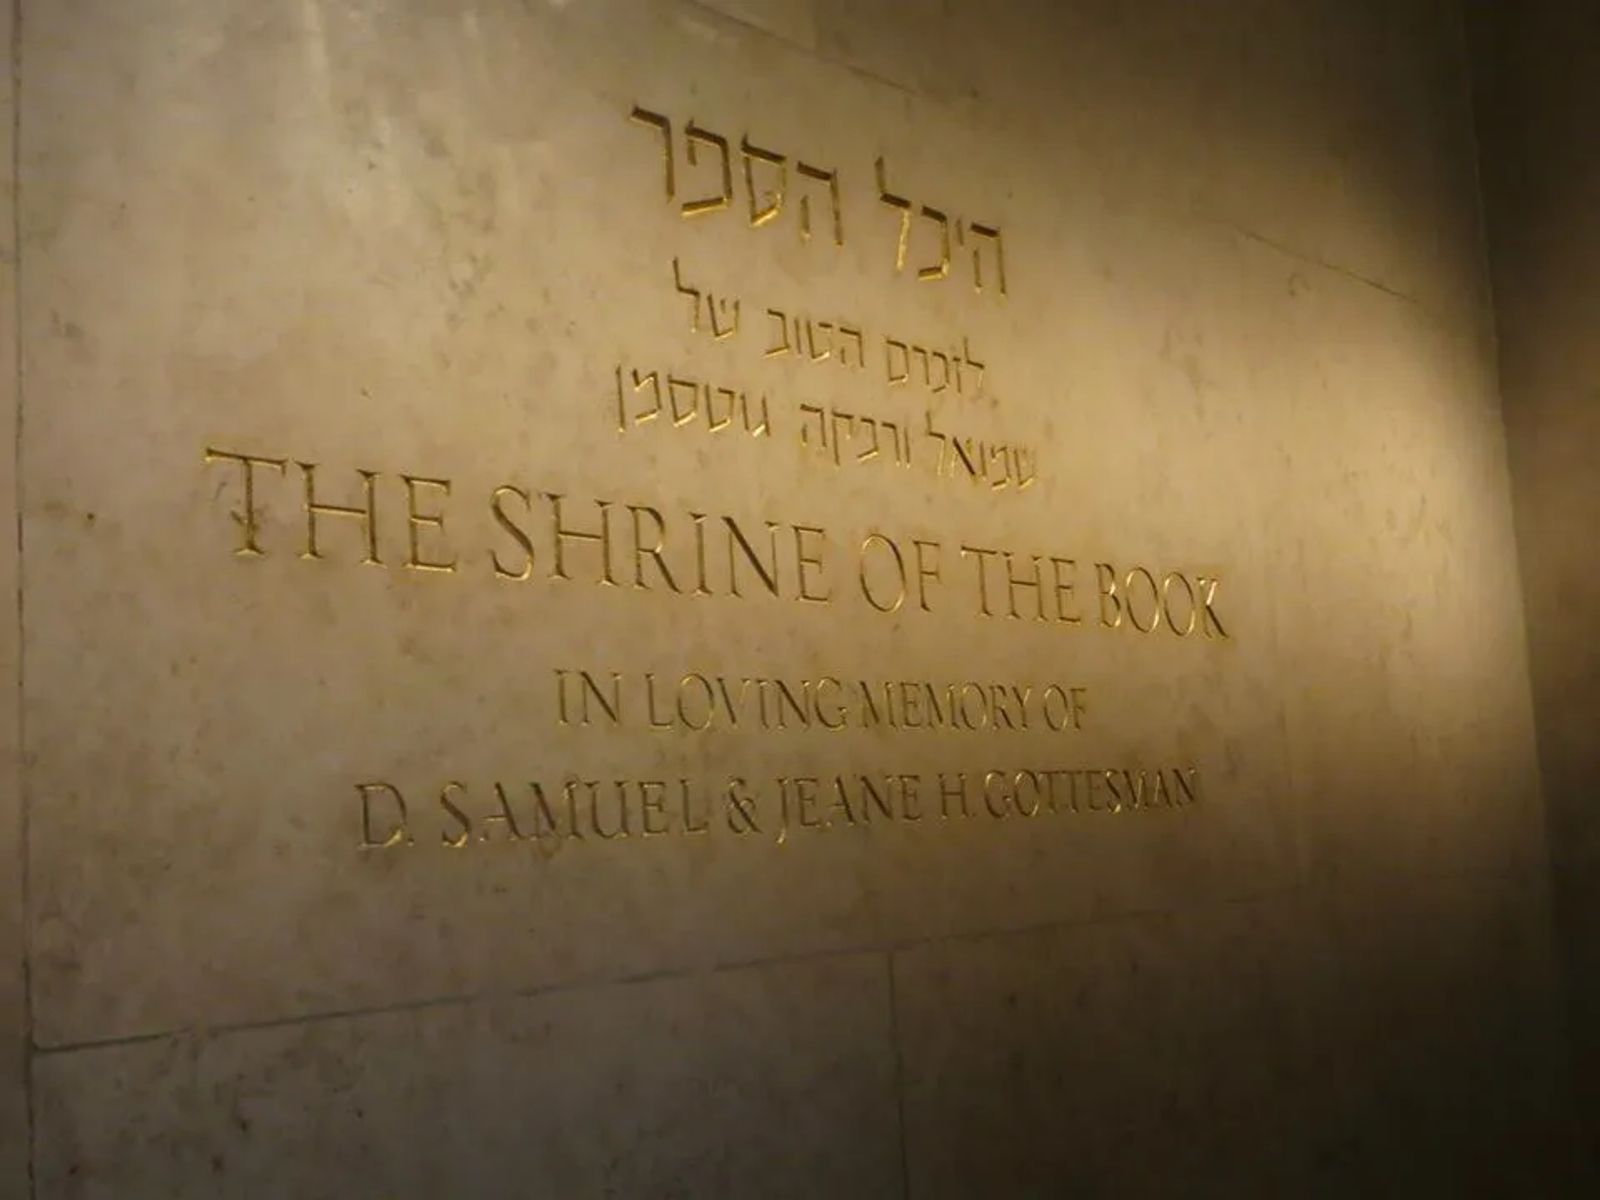 Shrine of the book